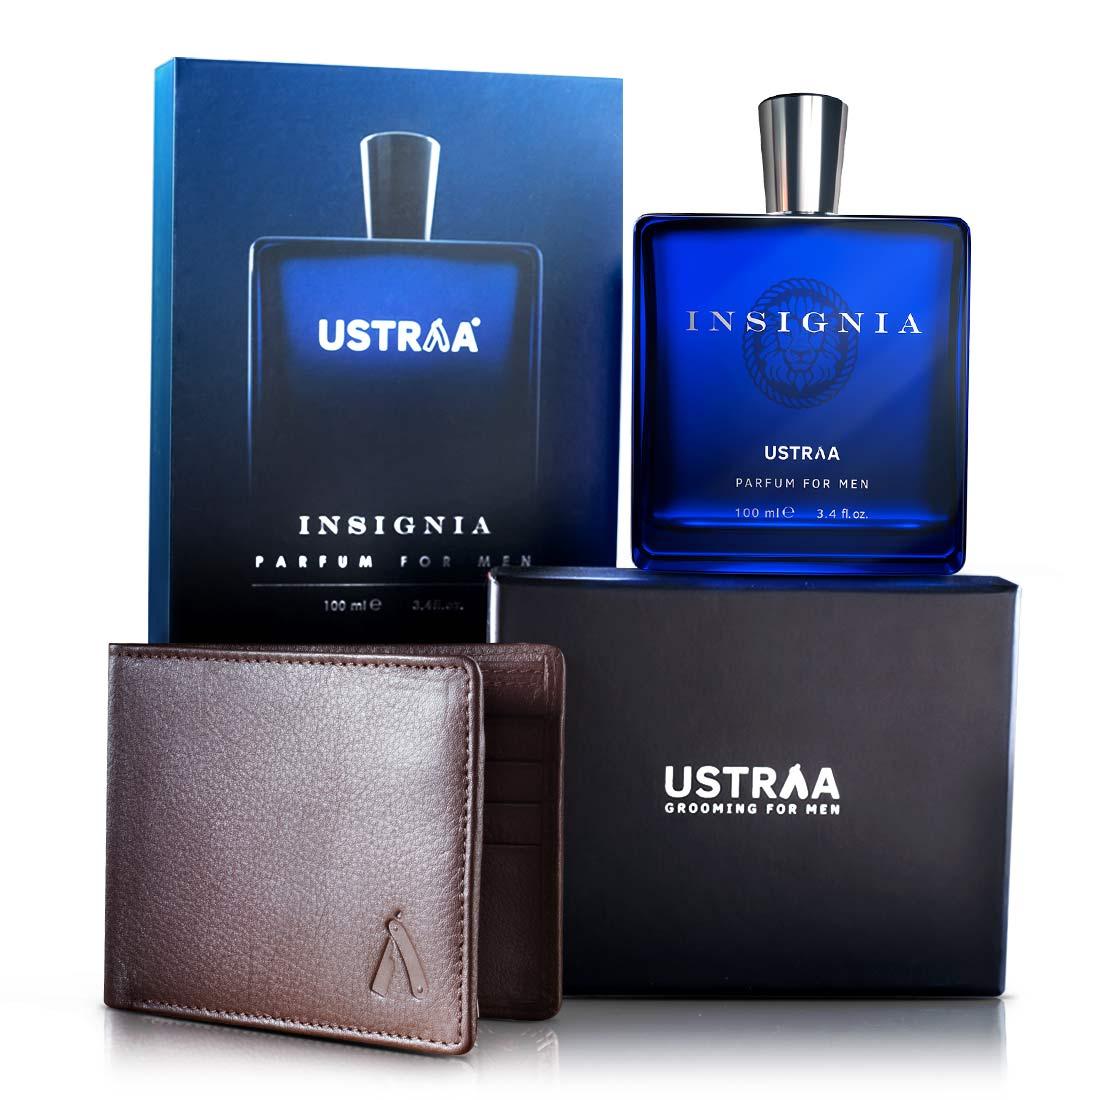 Ustraa Wallet & Insignia - Perfume for Men